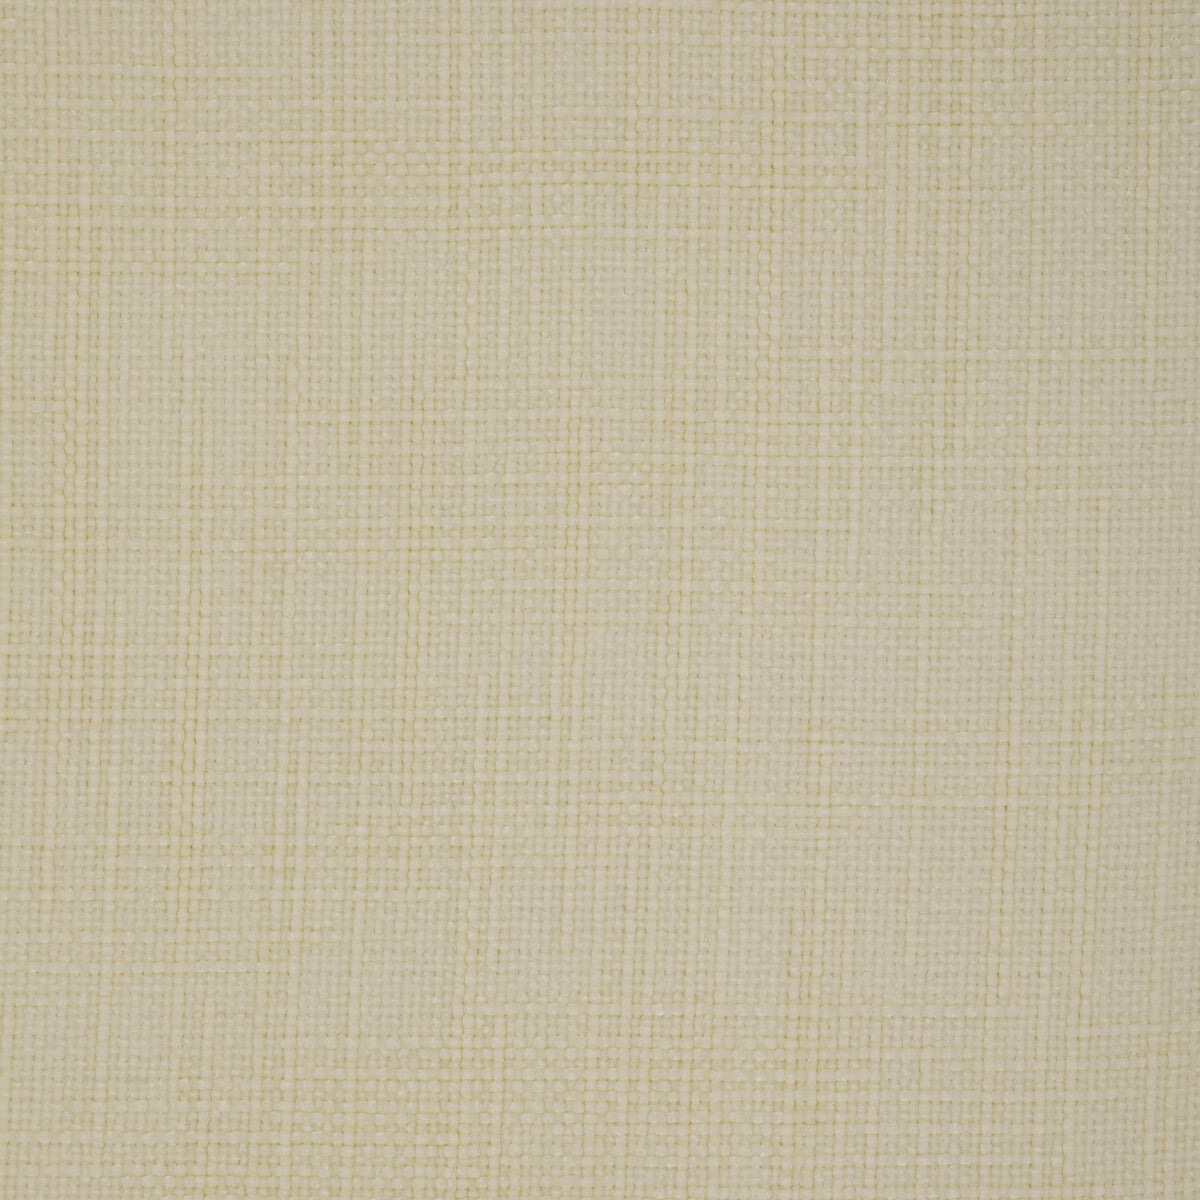 Kravet Smart fabric in 36991-111 color - pattern 36991.111.0 - by Kravet Smart in the Performance Kravetarmor collection